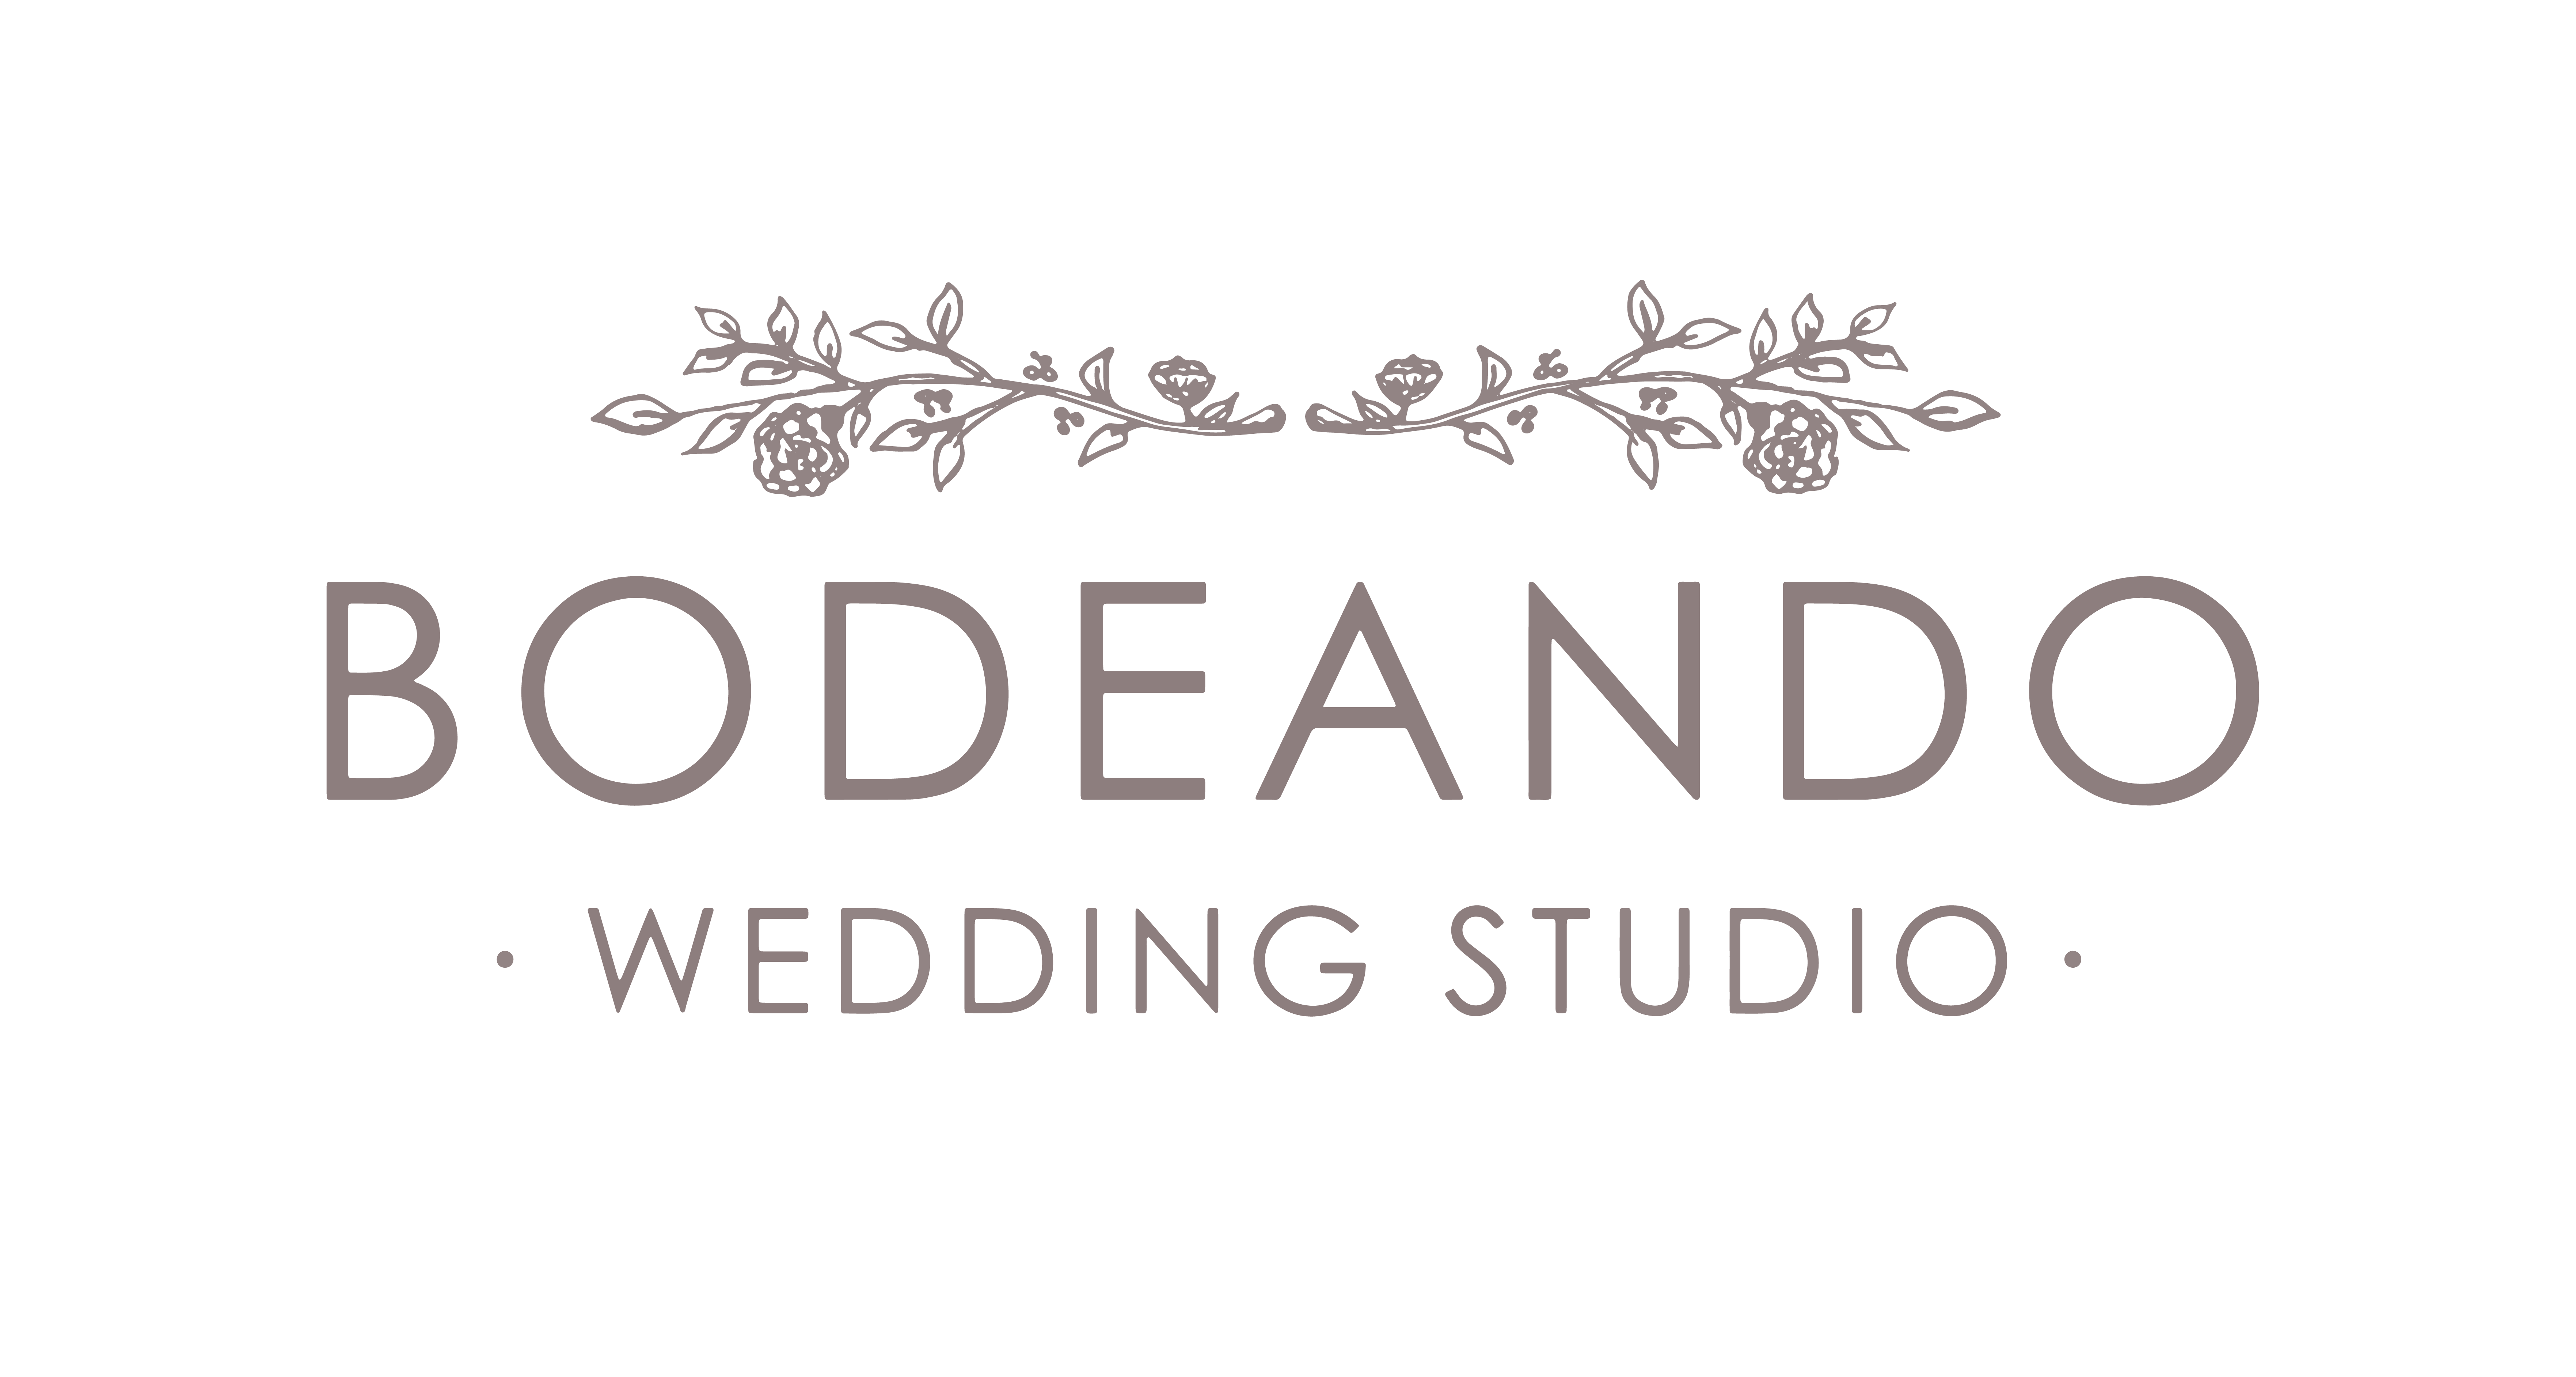 Bodeando Wedding Studio